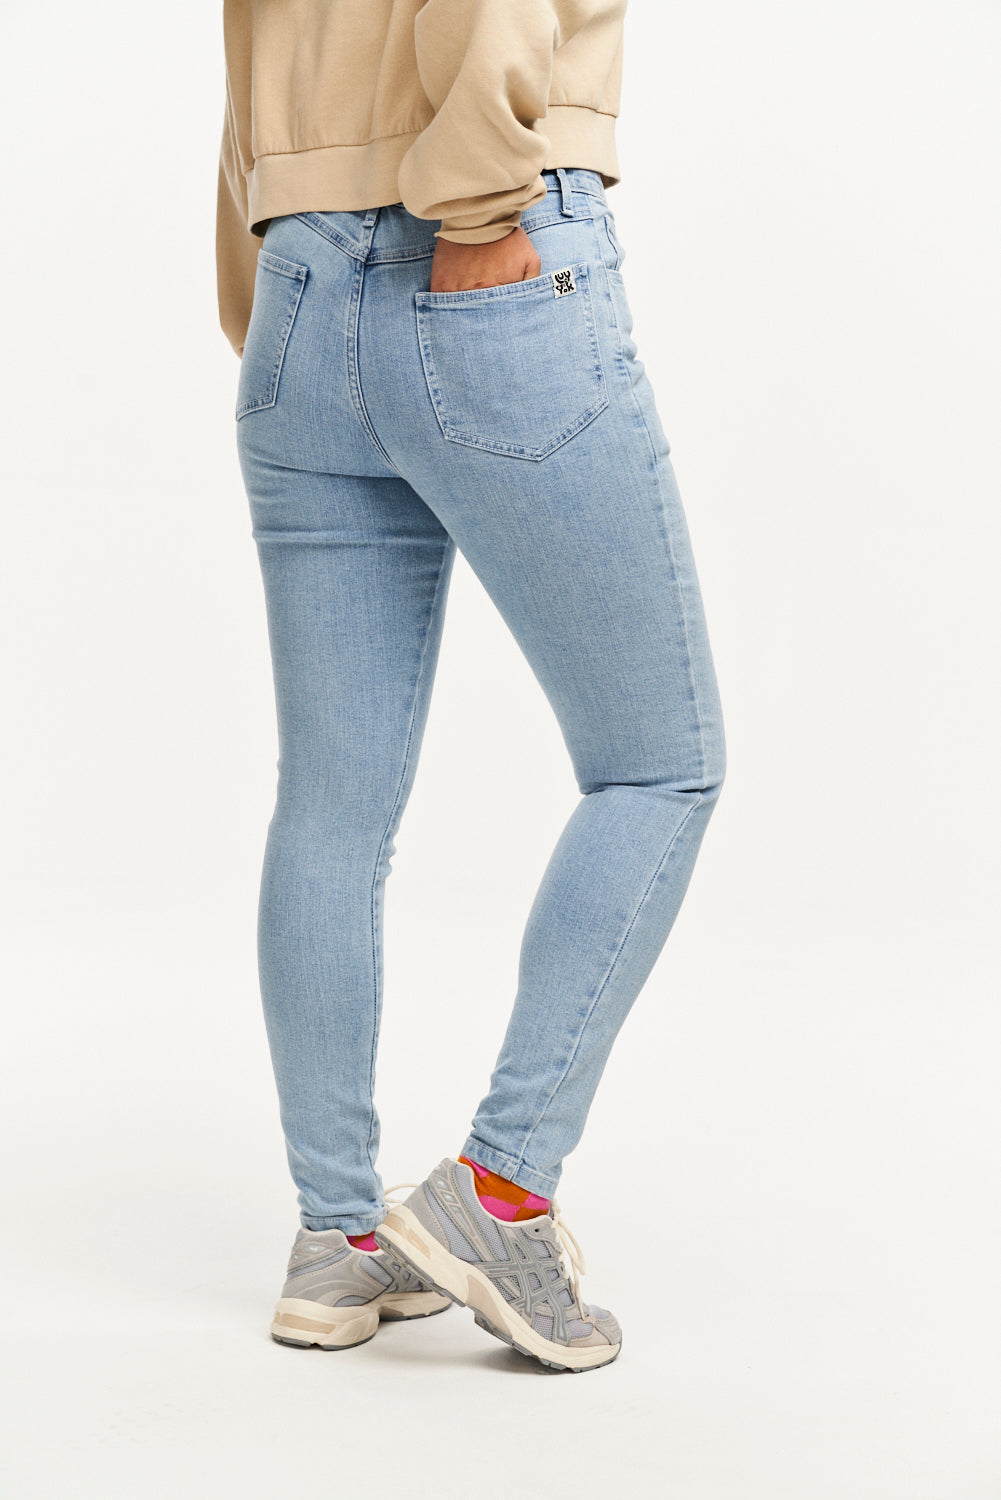 Soho Close Fitting Jeans: ORGANIC DENIM - Light Wash Blue